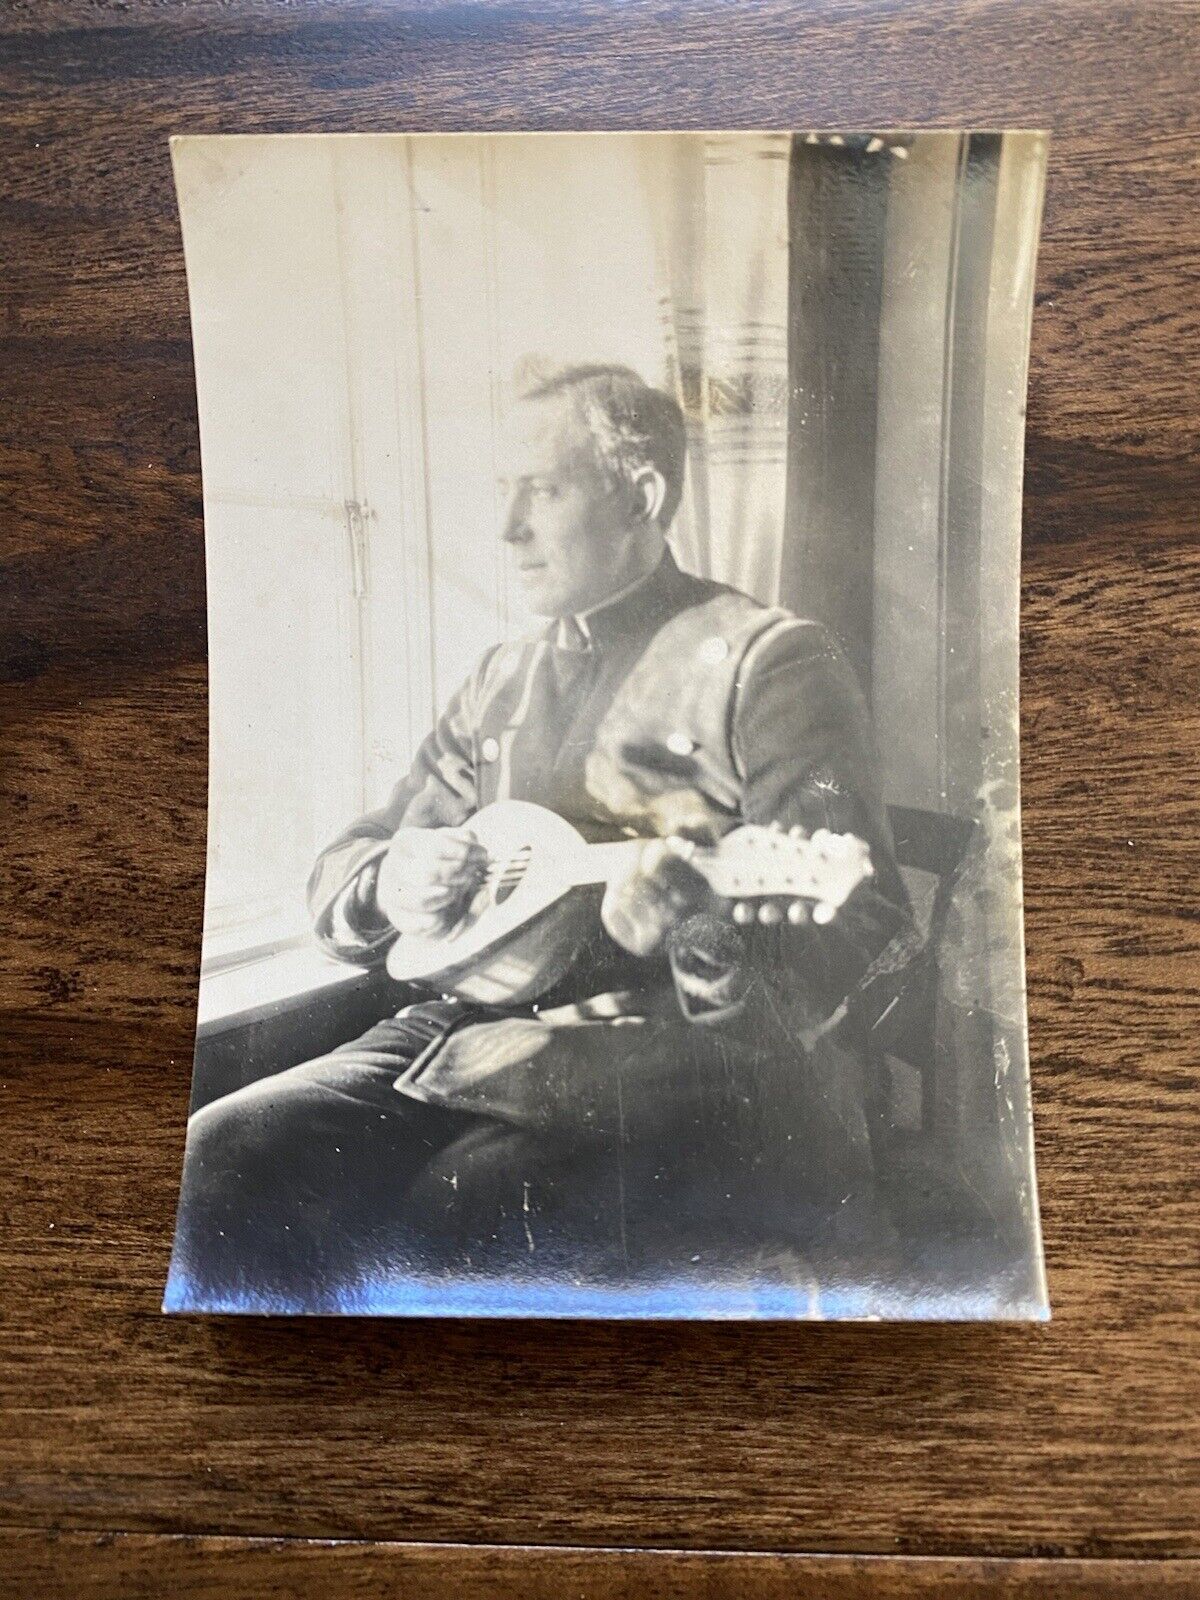 Mandolin Vintage Small Guitar Man Playing by Window Original Vintage Photo